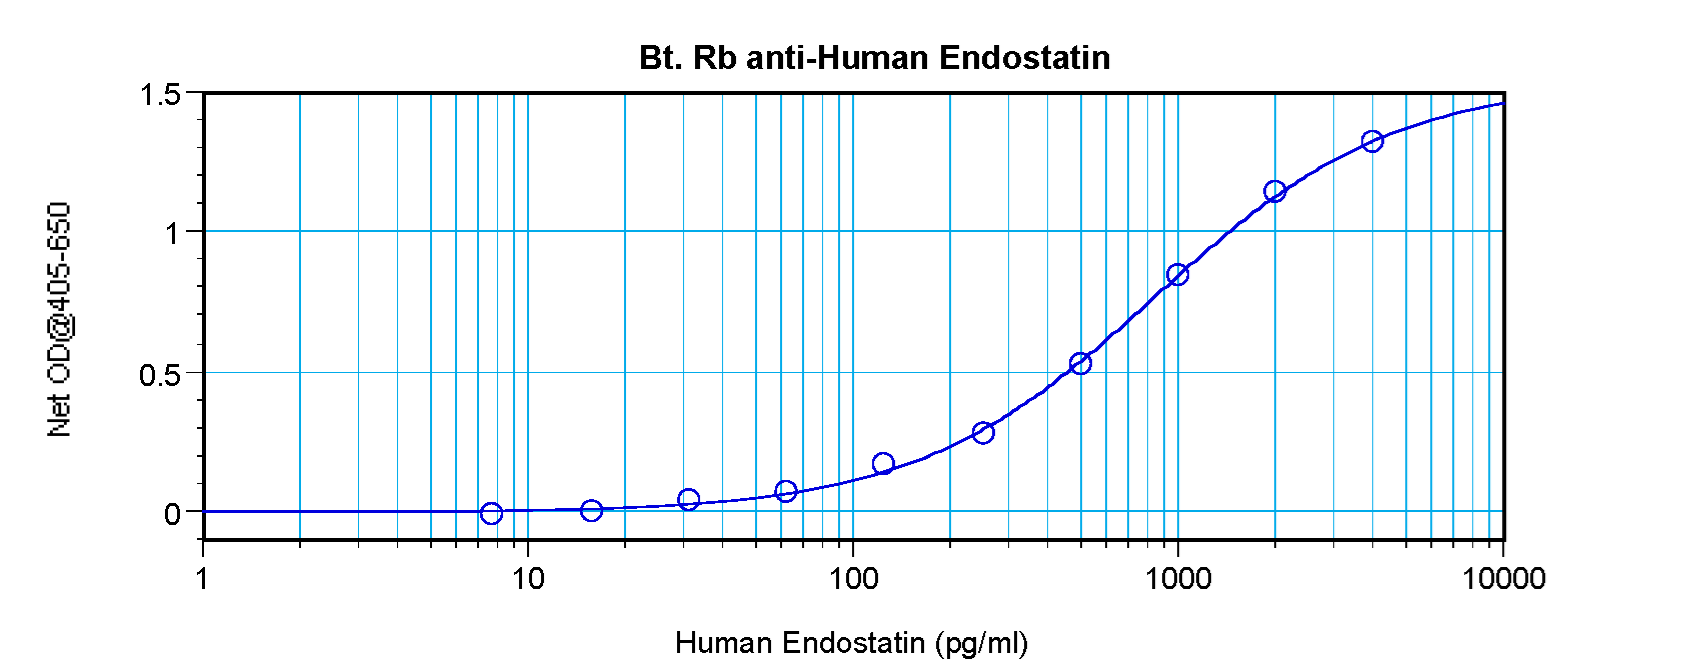 Endostatin Antibody - Biotinylated Anti-Human Endostatin Sandwich ELISA